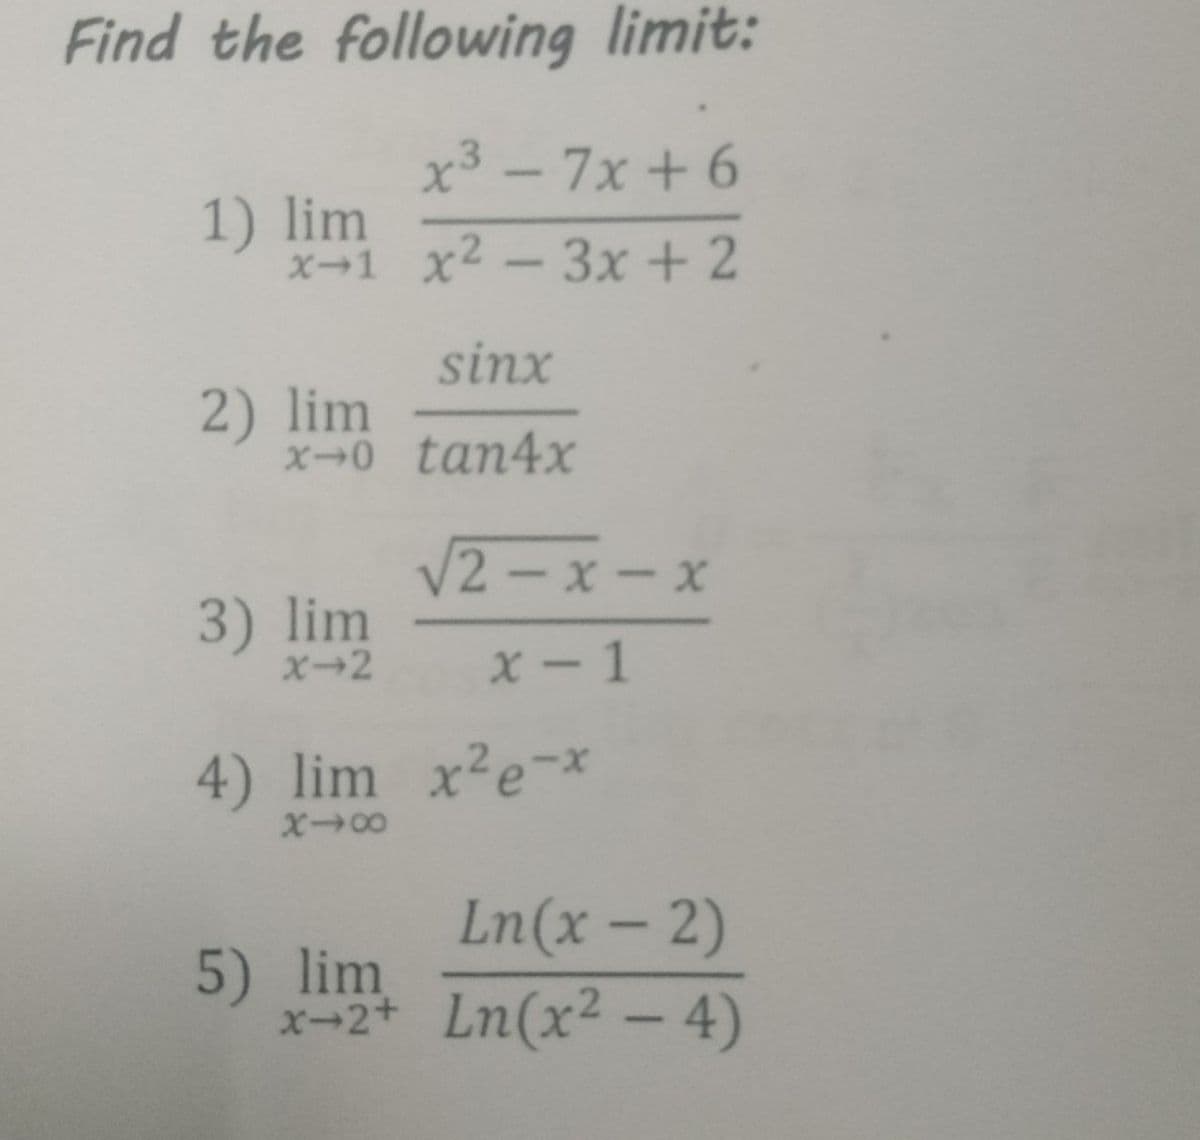 Find the following limit:
x3 - 7x +6
1) lim
X-1 x2-3x +2
sinx
2) lim
x-0 tan4x
/2-x-x
3) lim
X-2
x - 1
4) lim x'e-*
Ln(x- 2)
5) lim
x-2+ Ln(x2 - 4)
